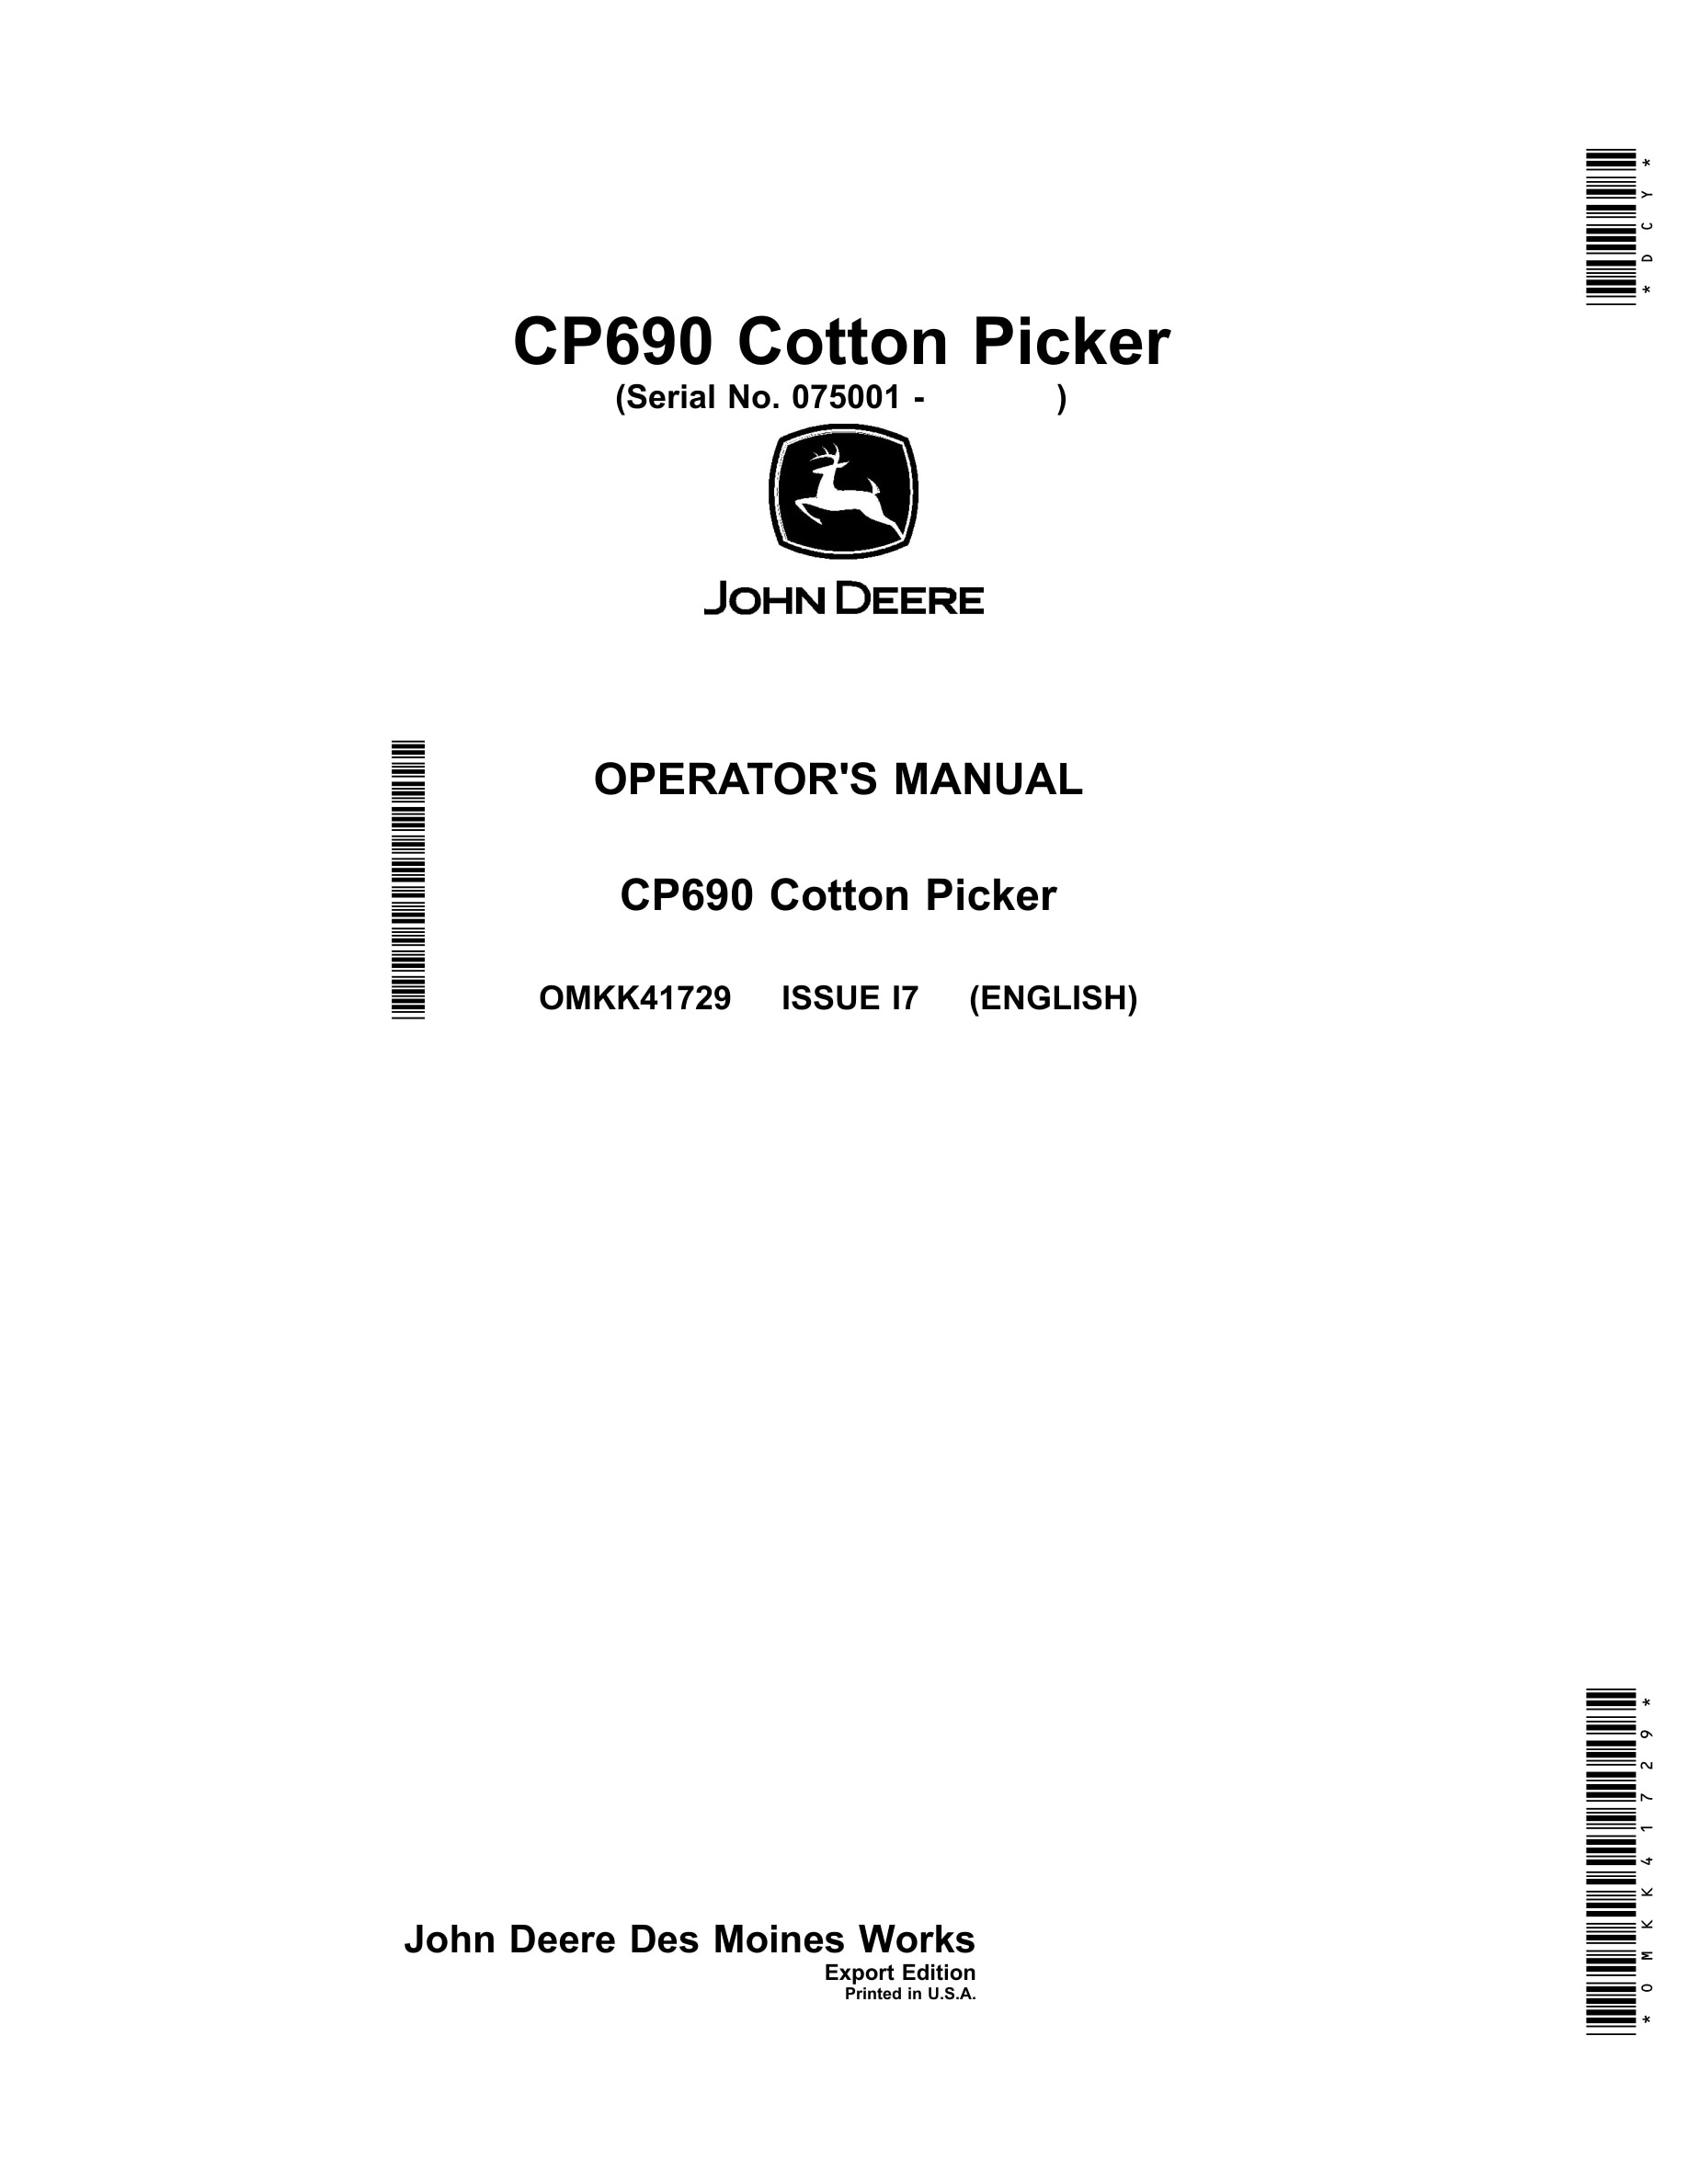 John Deere CP690 Cotton Picker Operator Manual OMKK41729-1